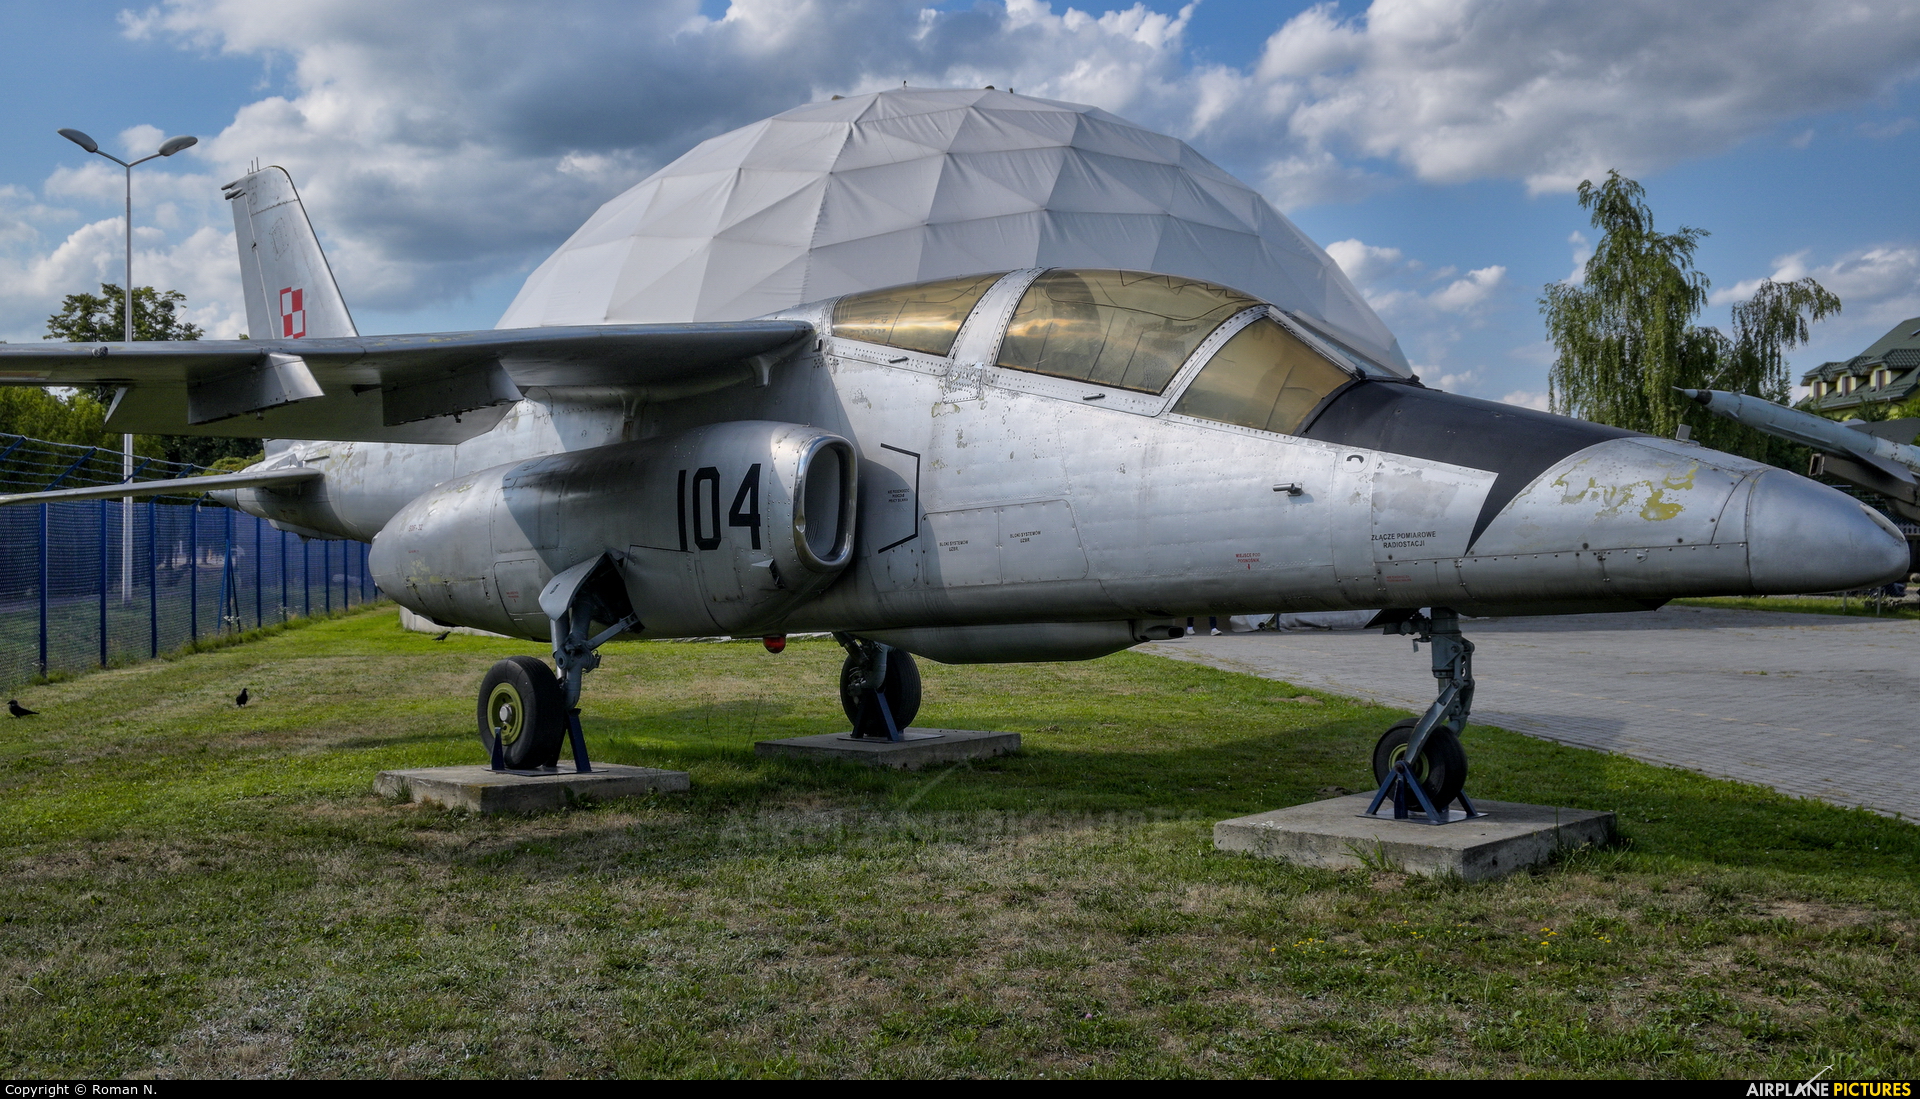 Poland - Air Force 104 aircraft at Dęblin - Museum of Polish Air Force